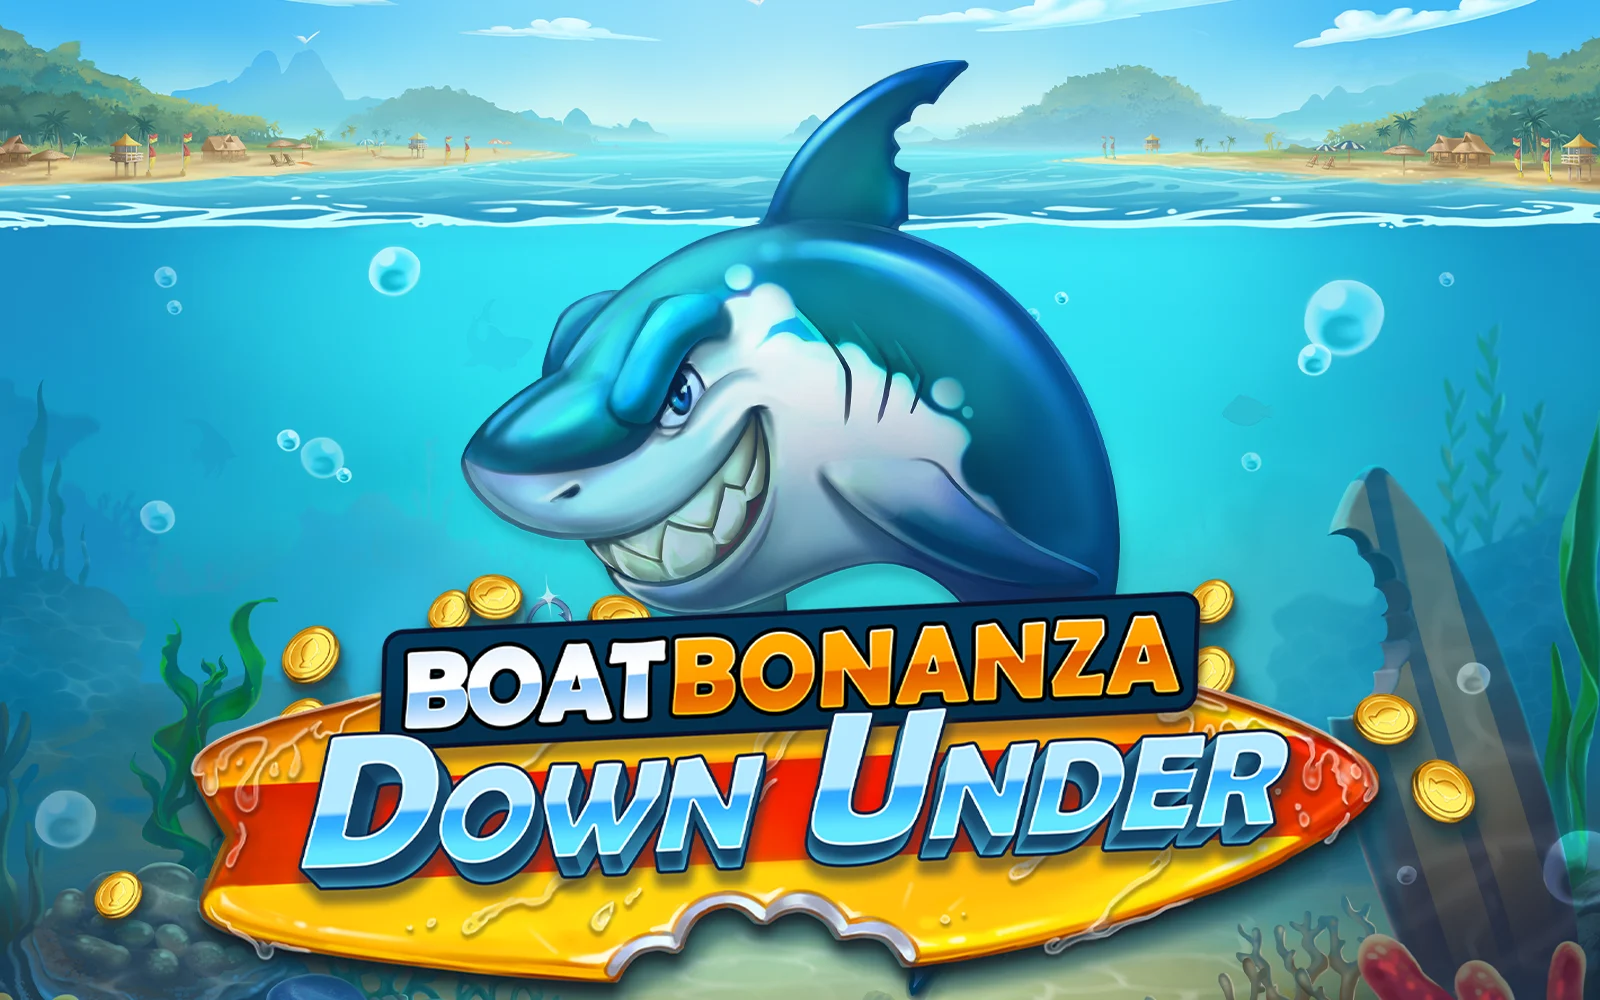 Play Boat Bonanza Down Under on Starcasino.be online casino